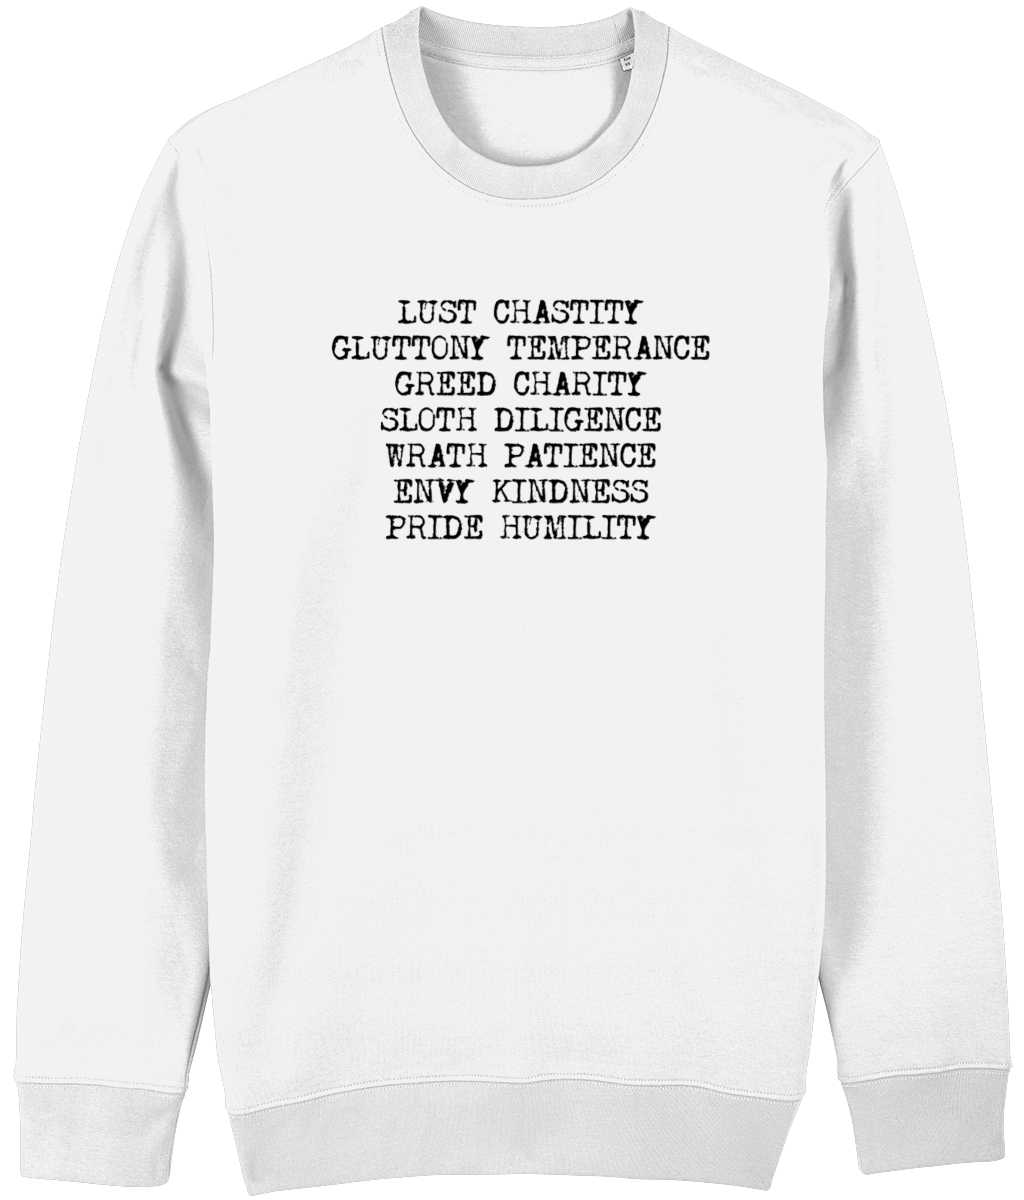 Saints & Sinners non gender sweatshirt Cherchez La Femme brand